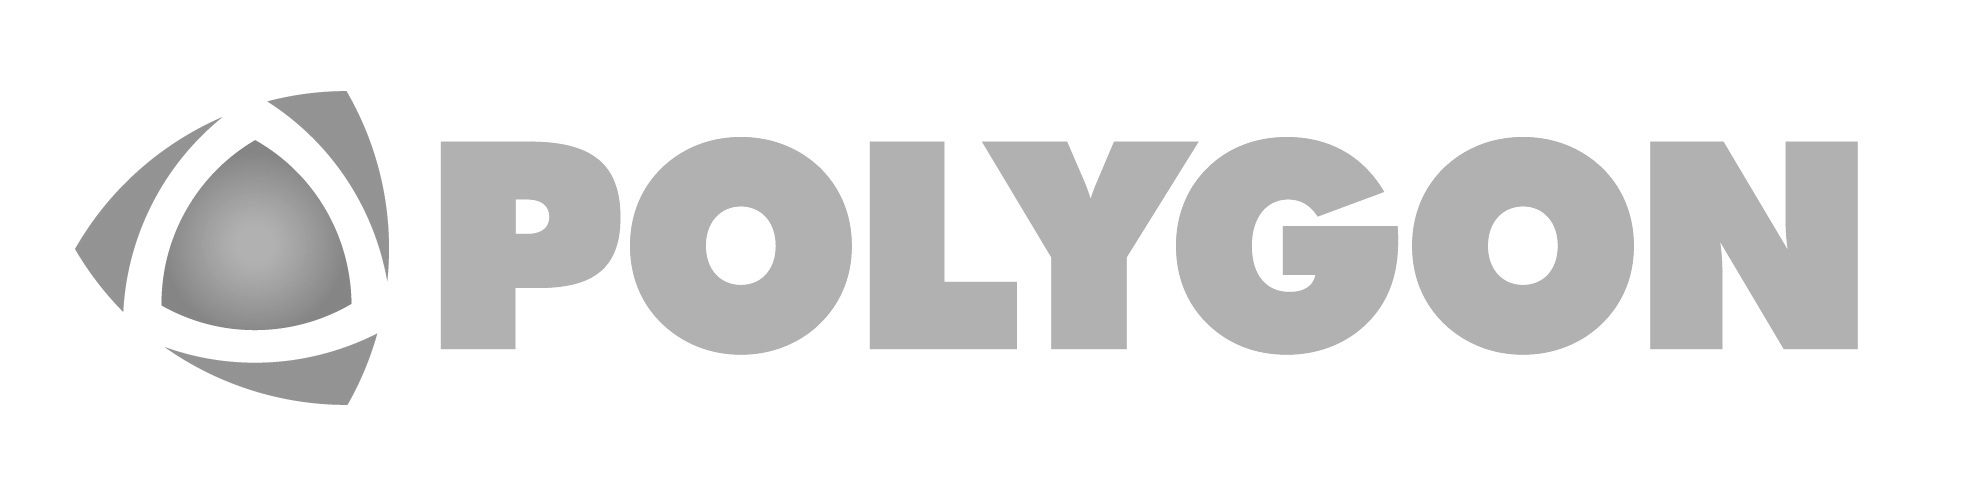 Polygon Logo Hi-Res.jpg